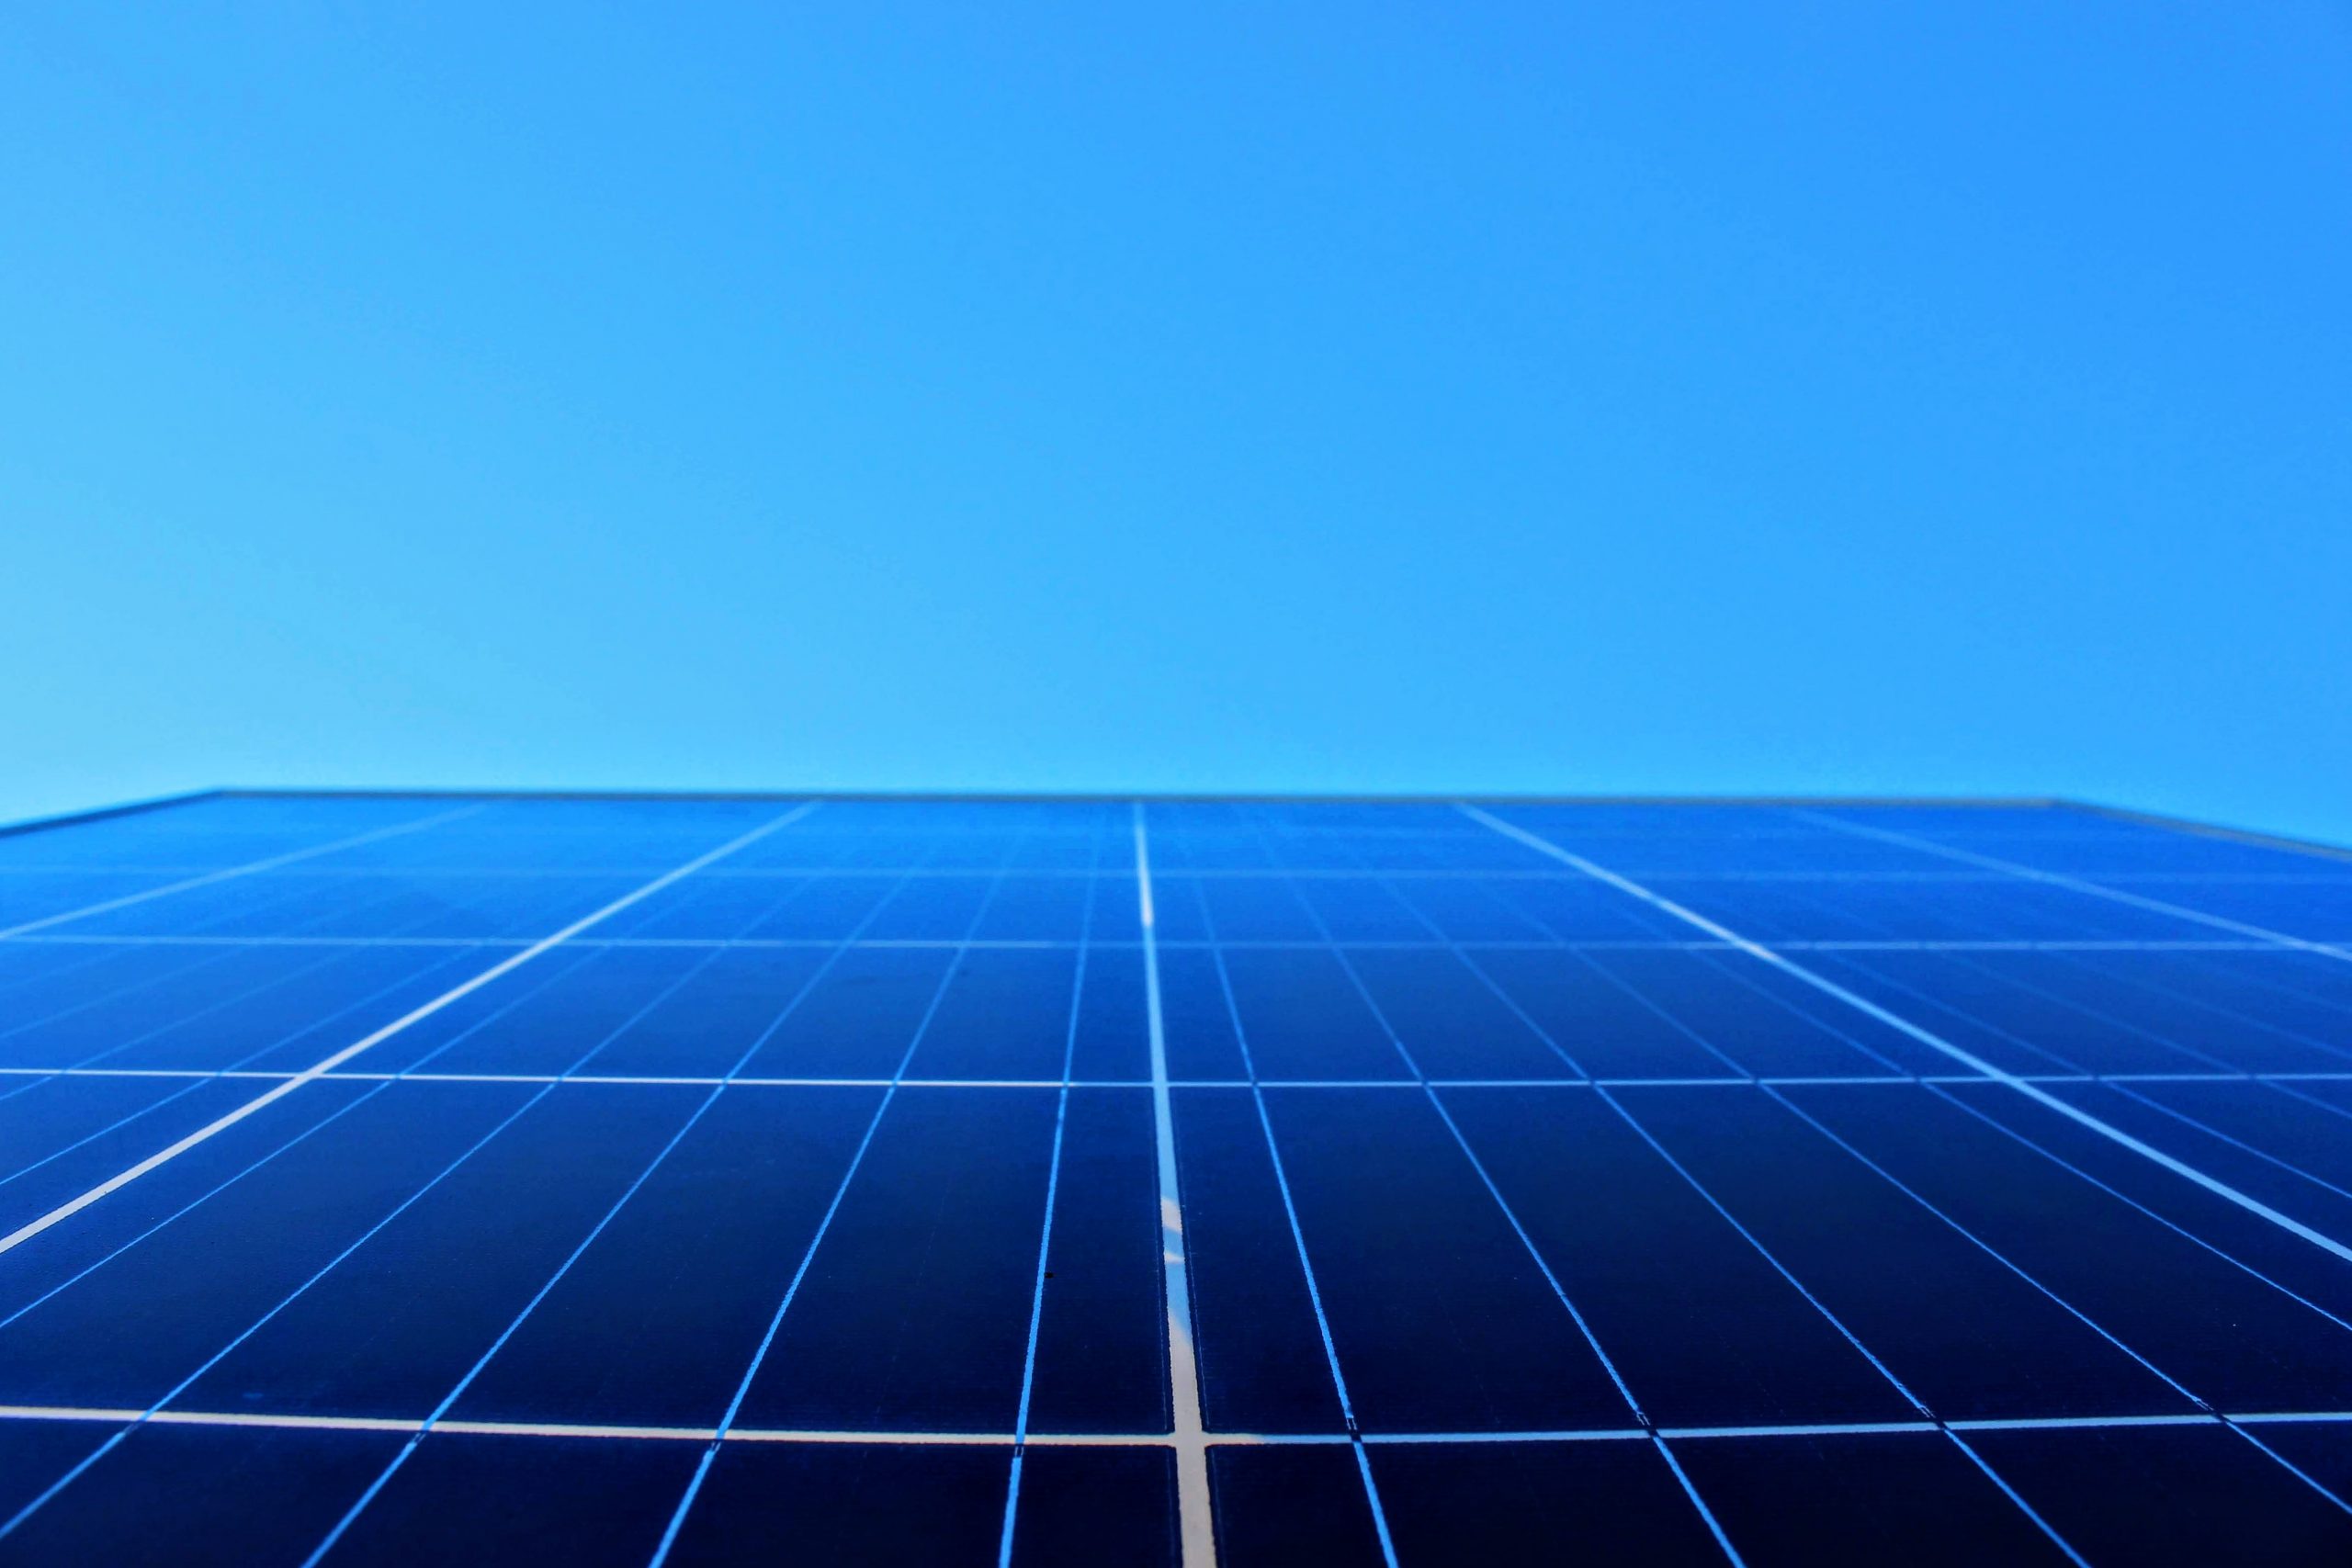 Solar Panel Installation Job Training in Orlando